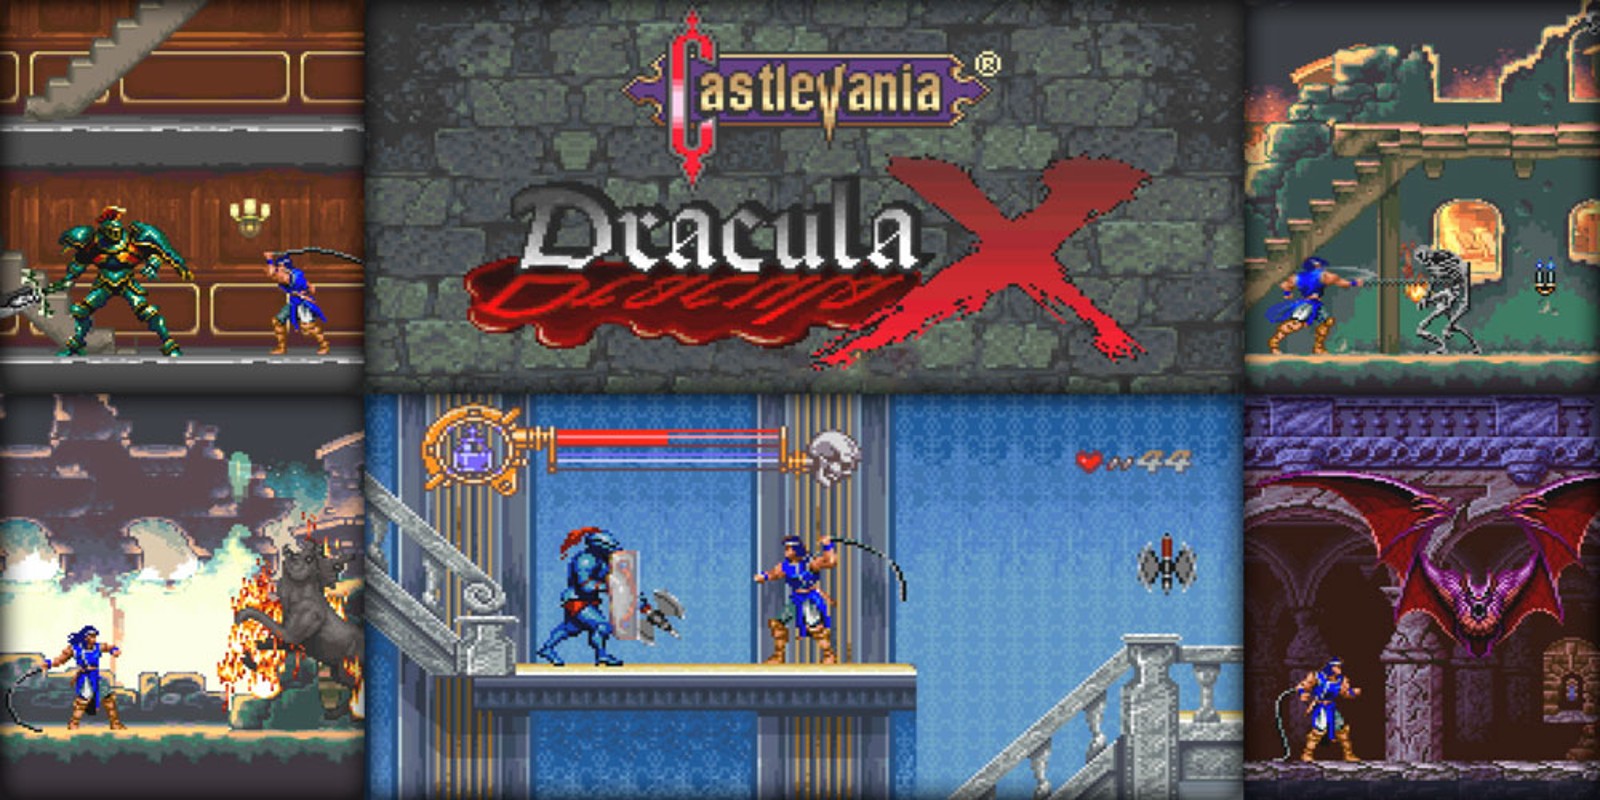 Castlevania Dracula X | Super Nintendo | Games | Nintendo1600 x 800